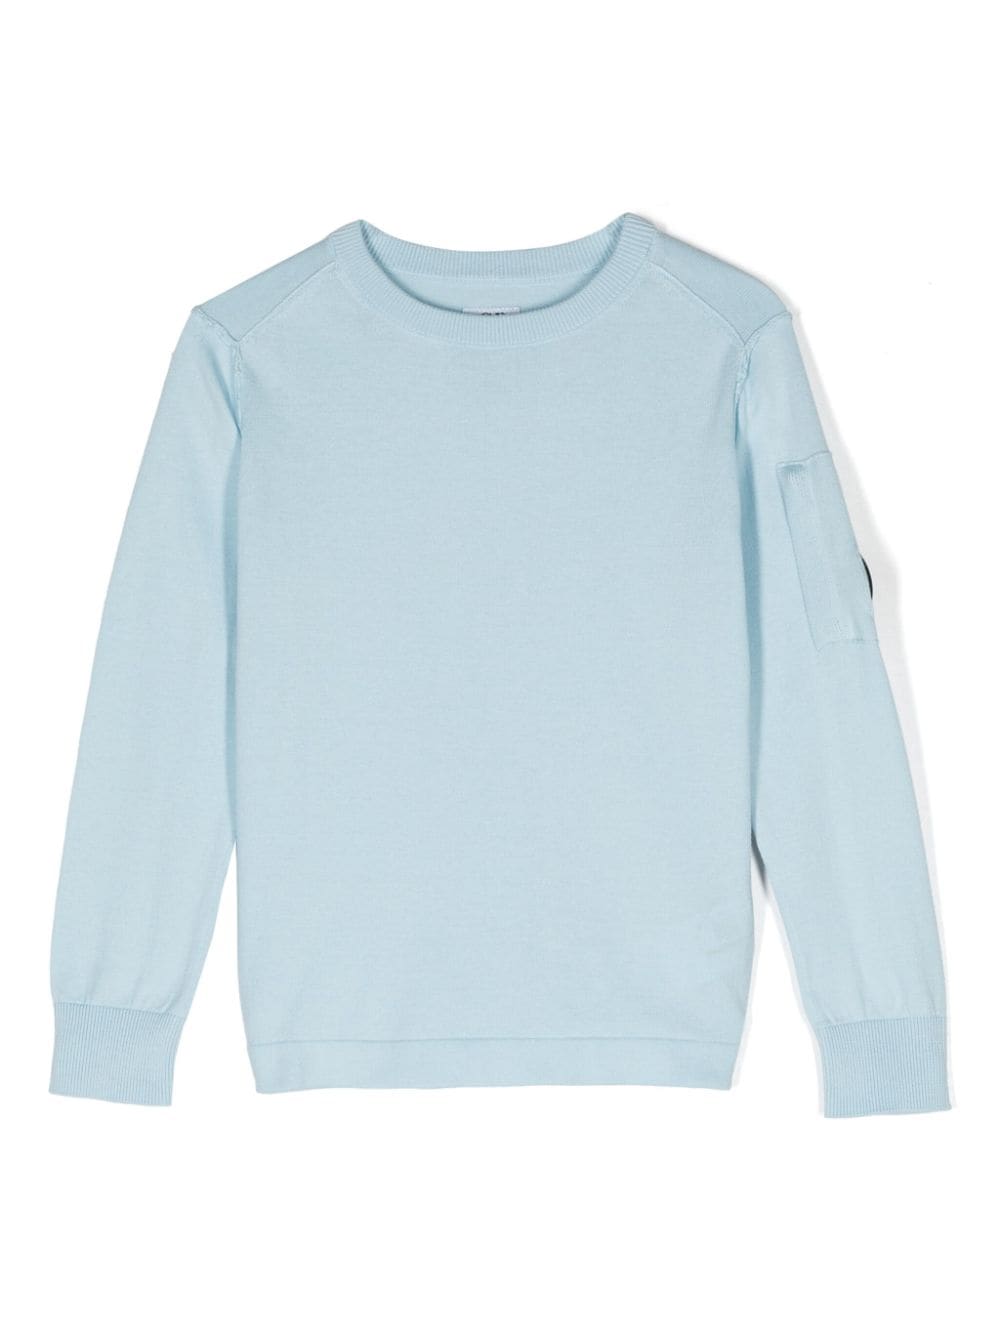 Light blue sweatshirt for boys with logo